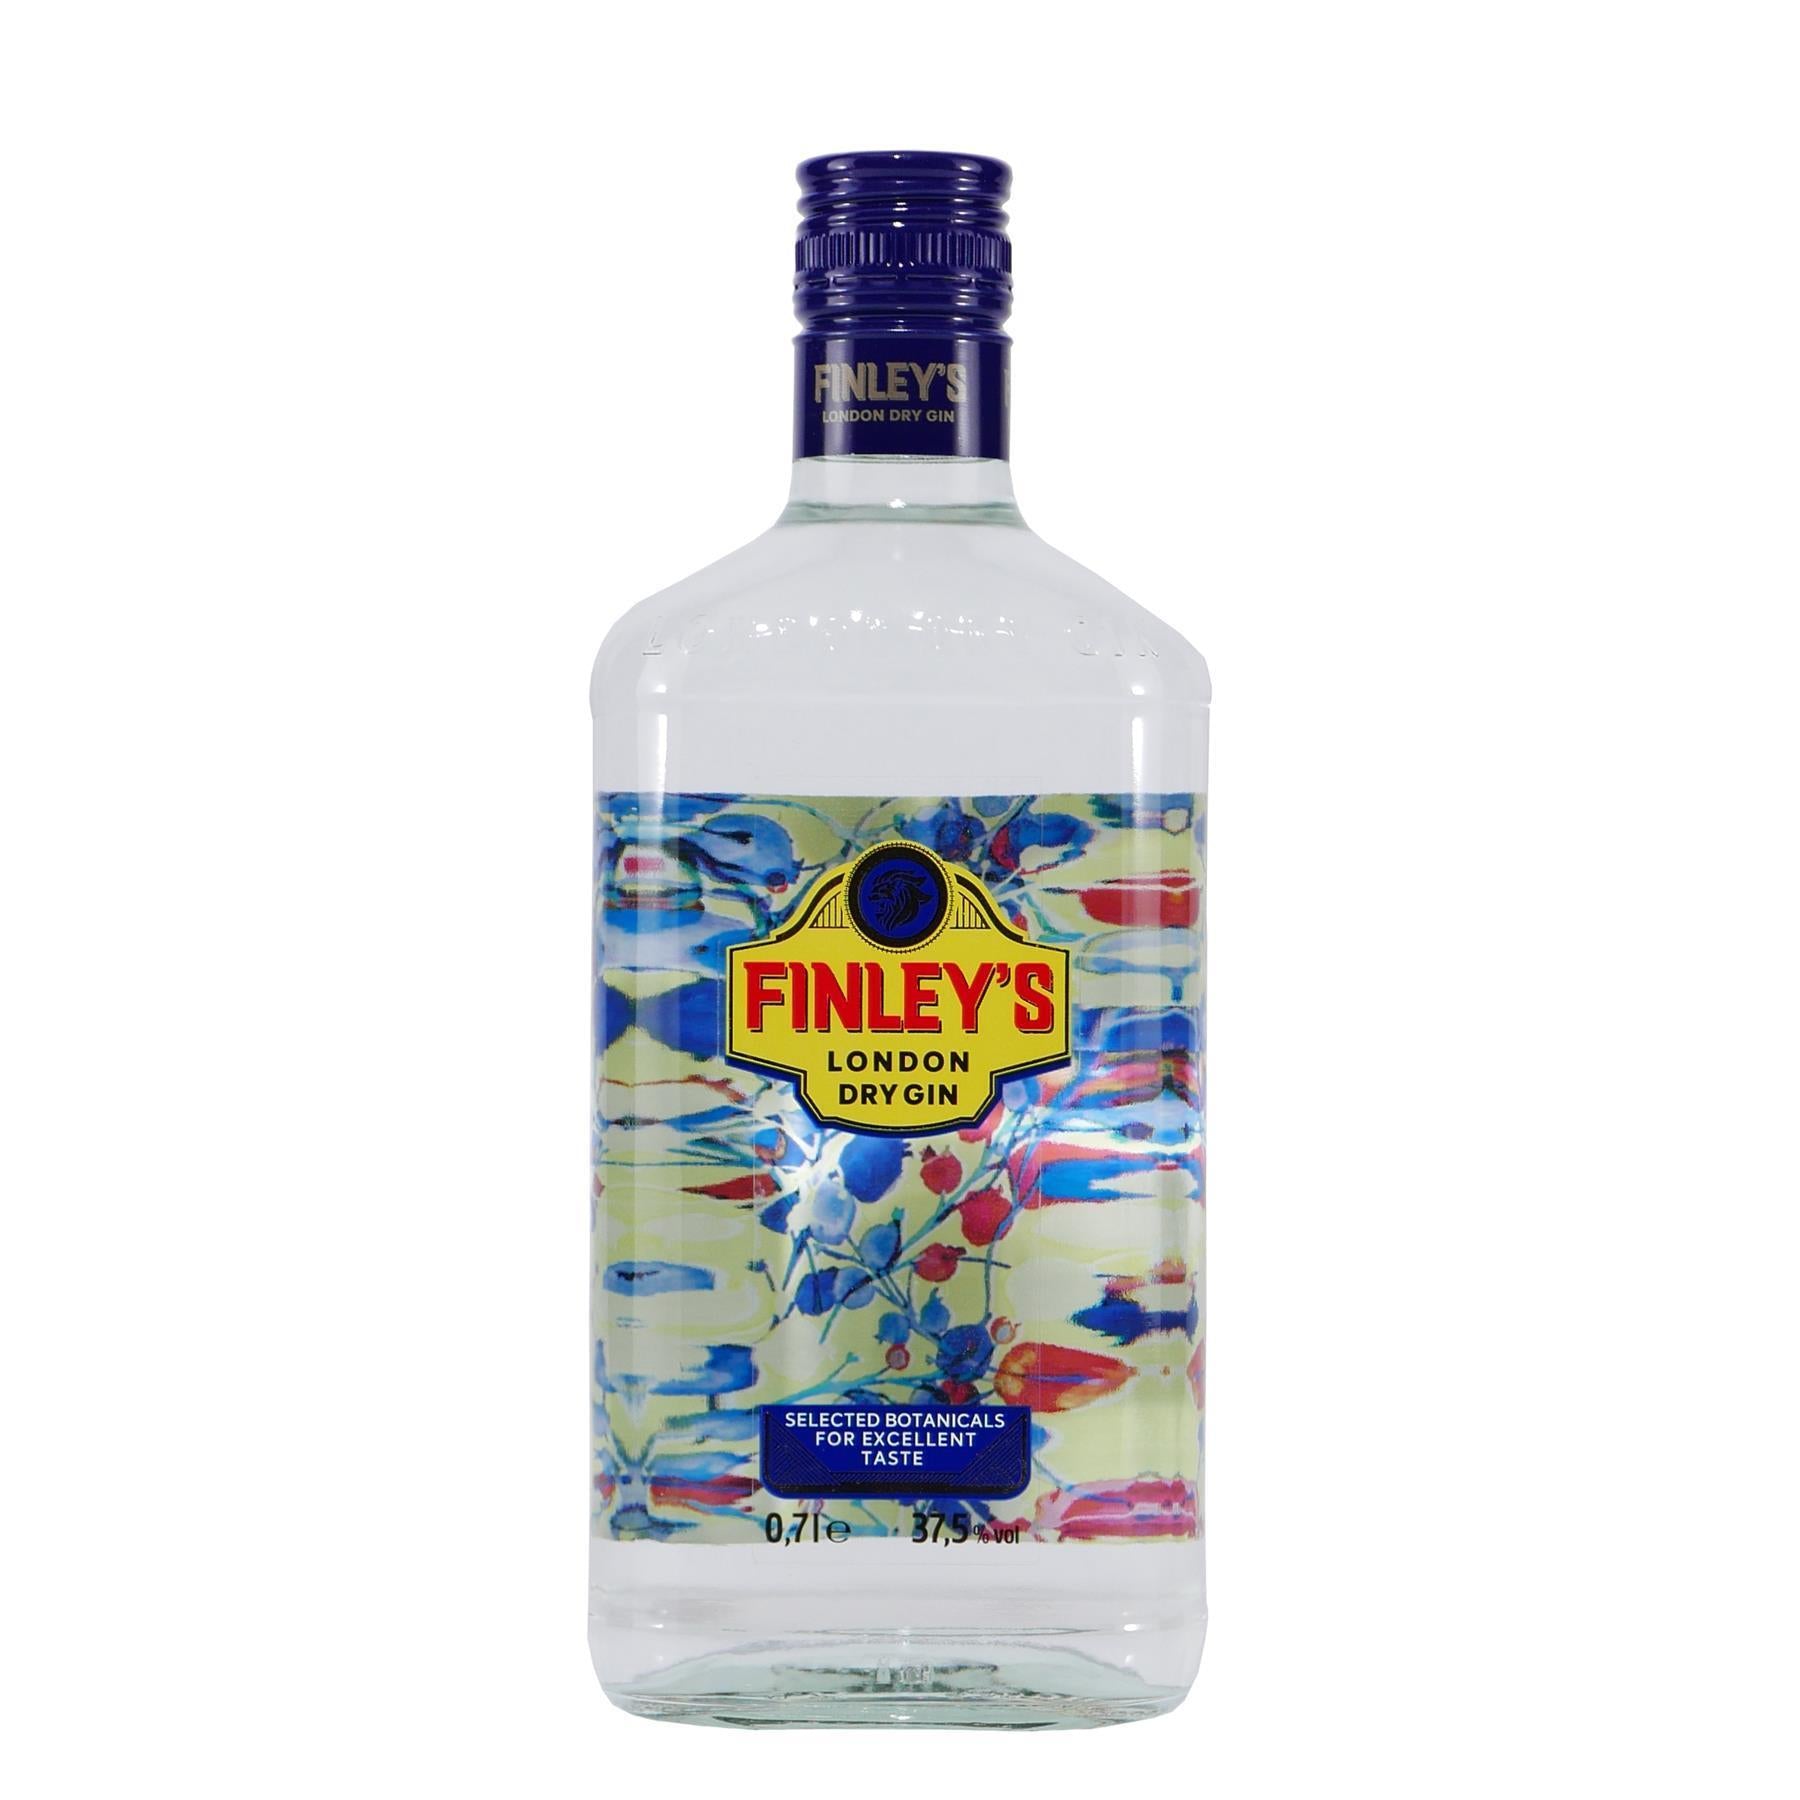 Finley's London Dry Gin